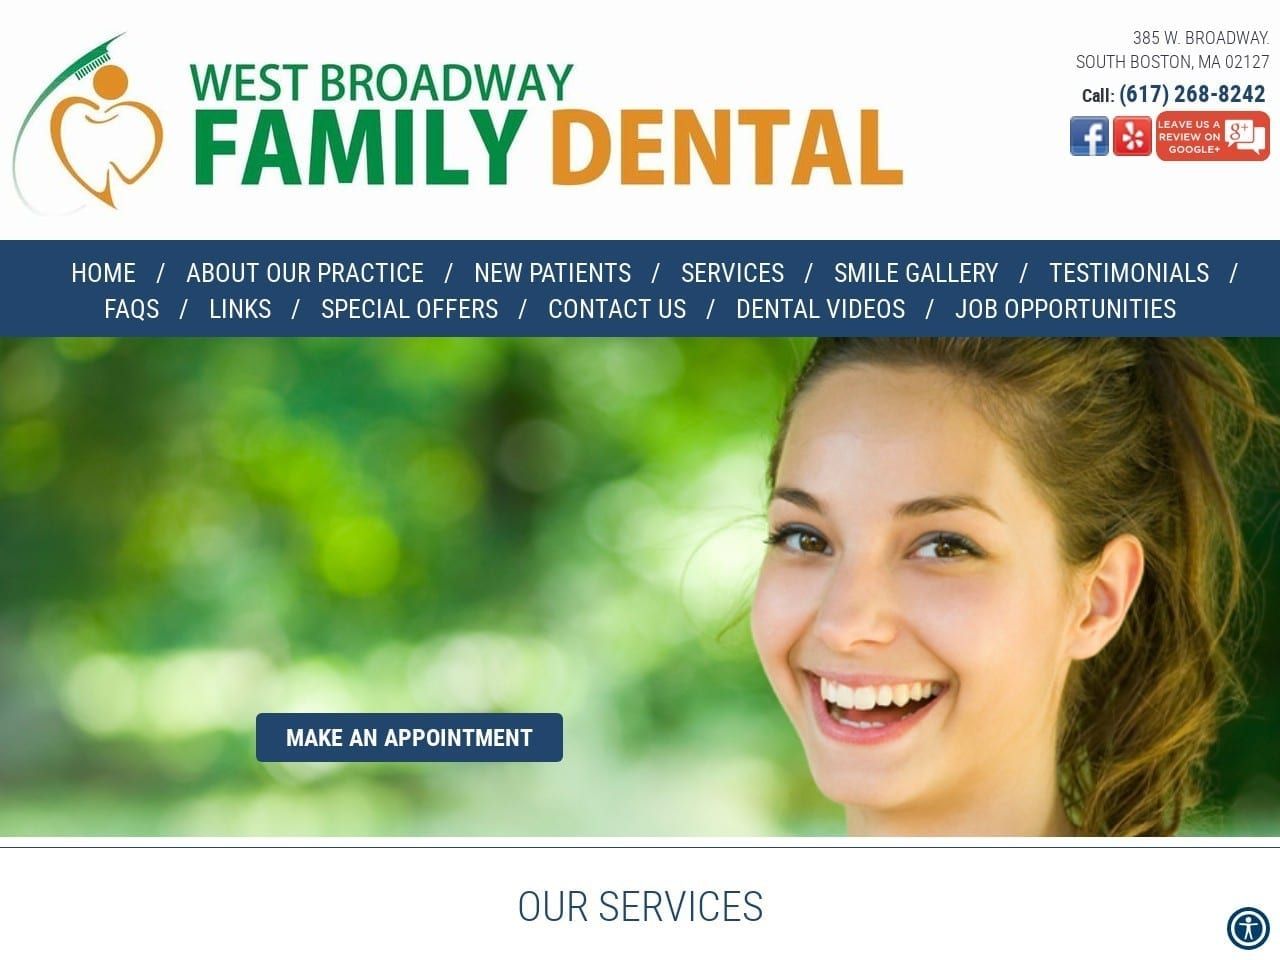 West Broadway Family Dental Website Screenshot from wbfamilydental.com